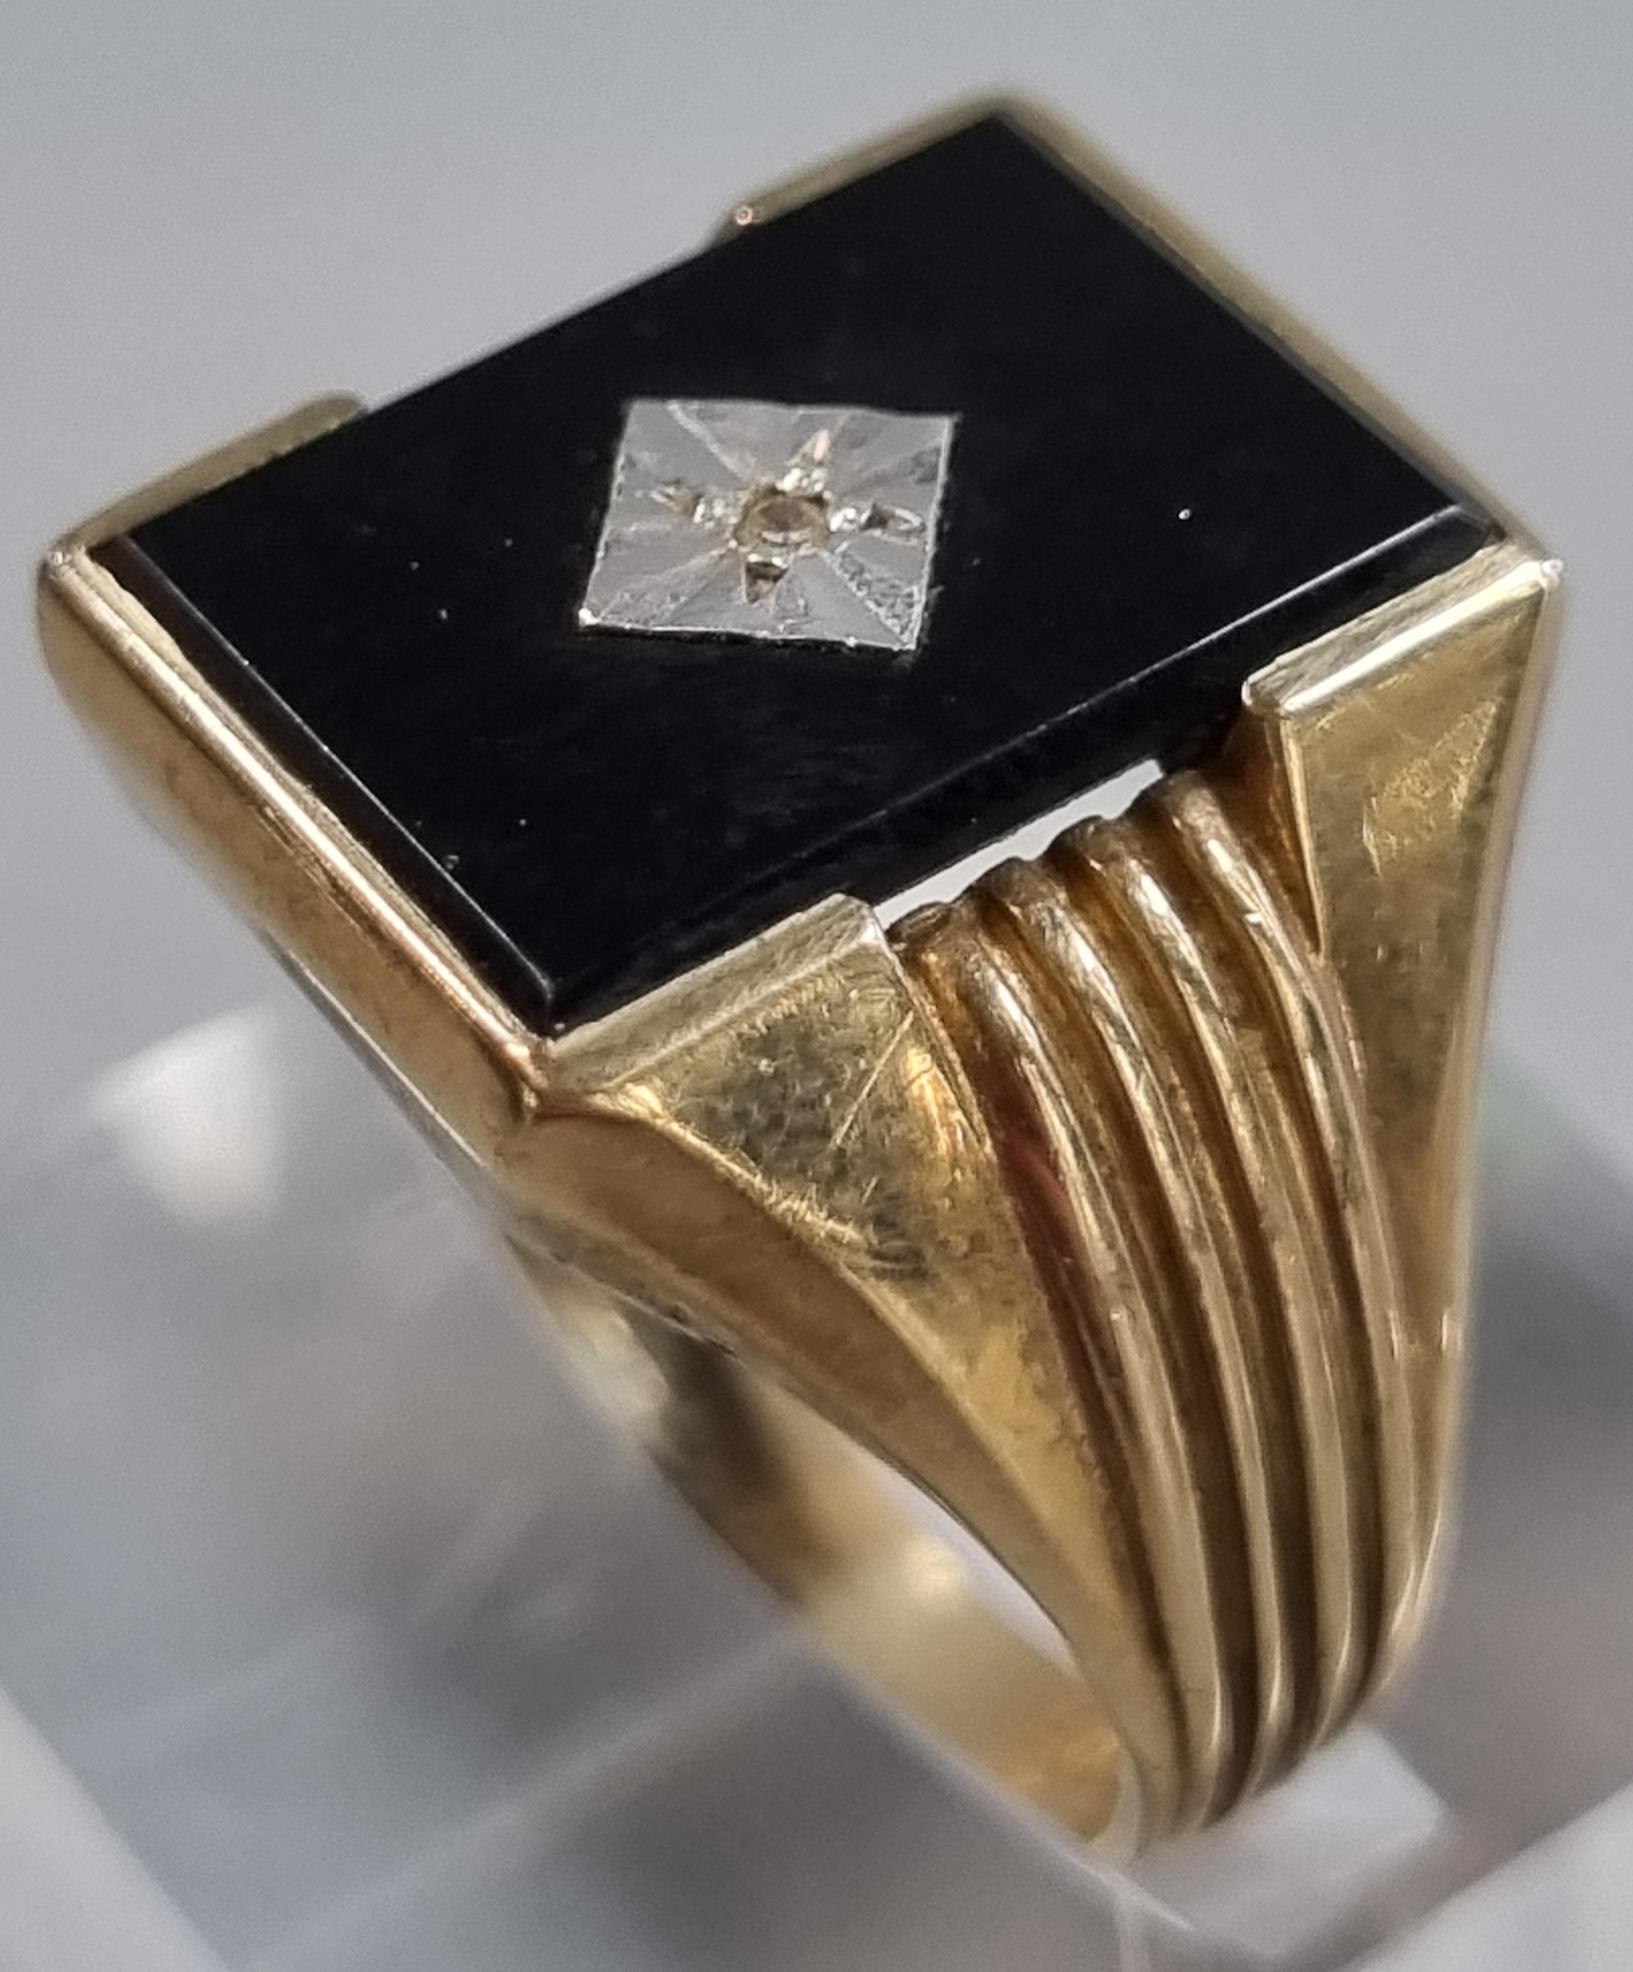 9ct gold black onyx signet ring with tiny diamond chip. 5.4g approx. Size S. (B.P. 21% + VAT)